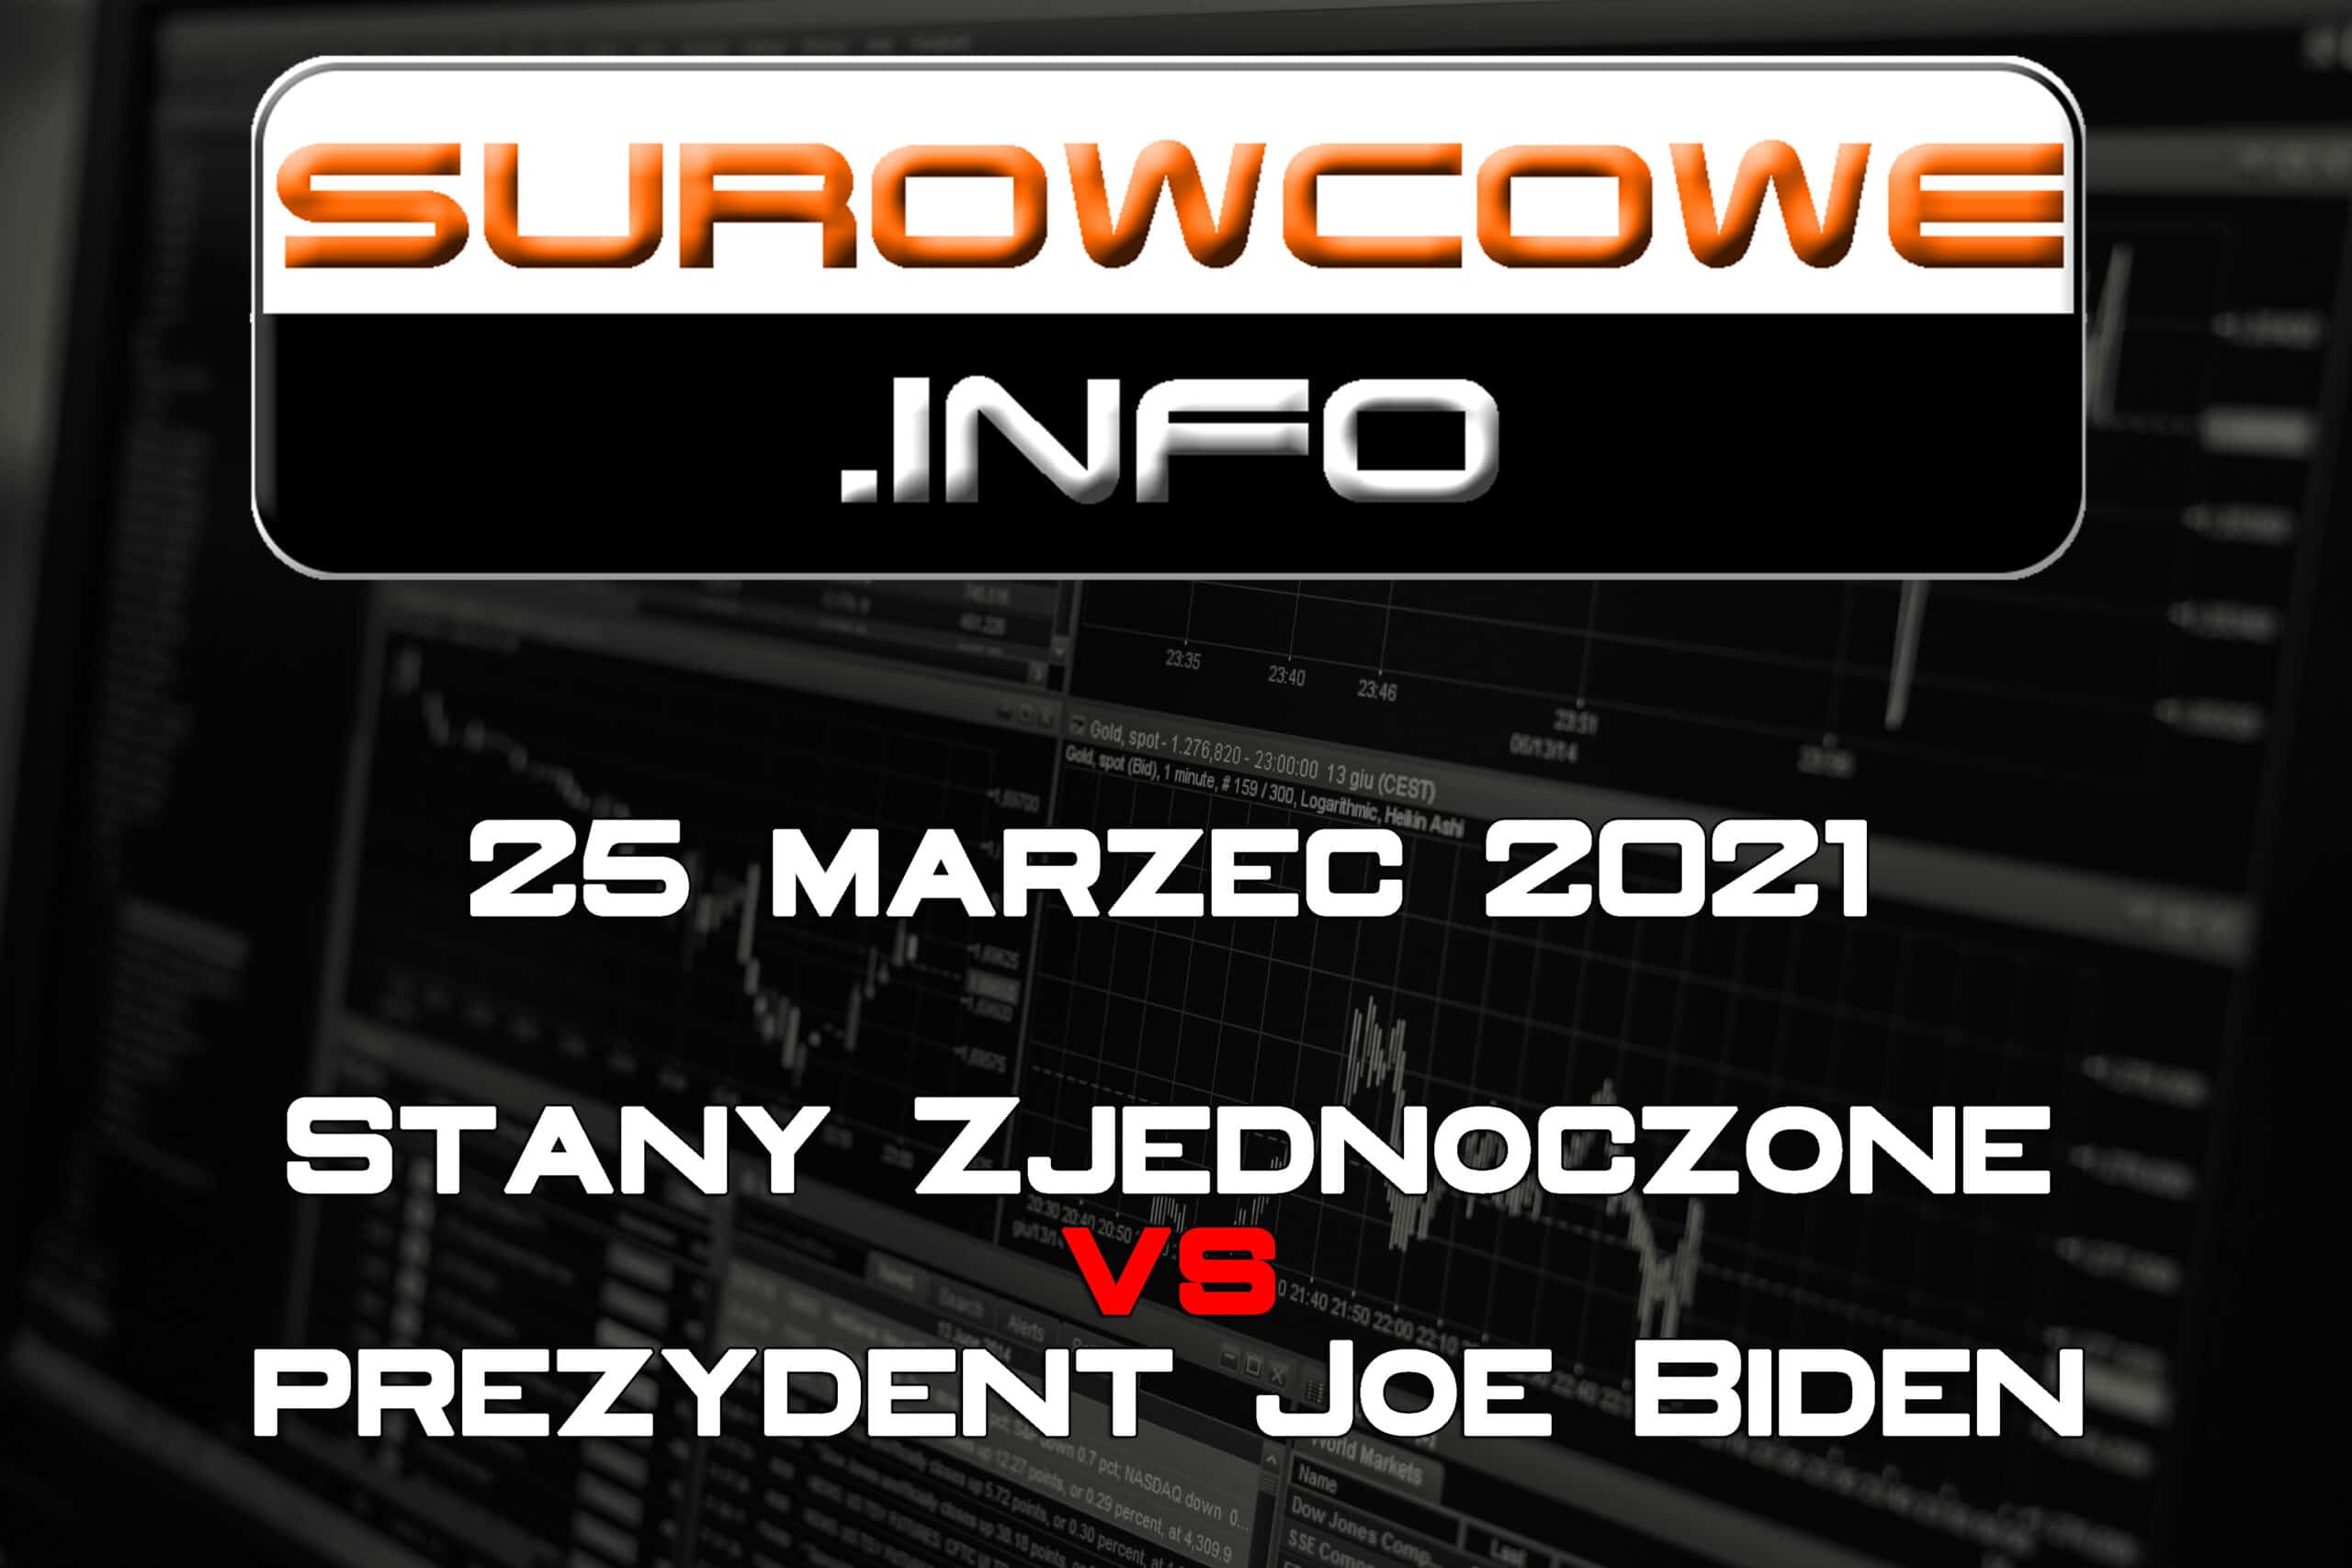 Surowcowe.info 25 marzec 2021